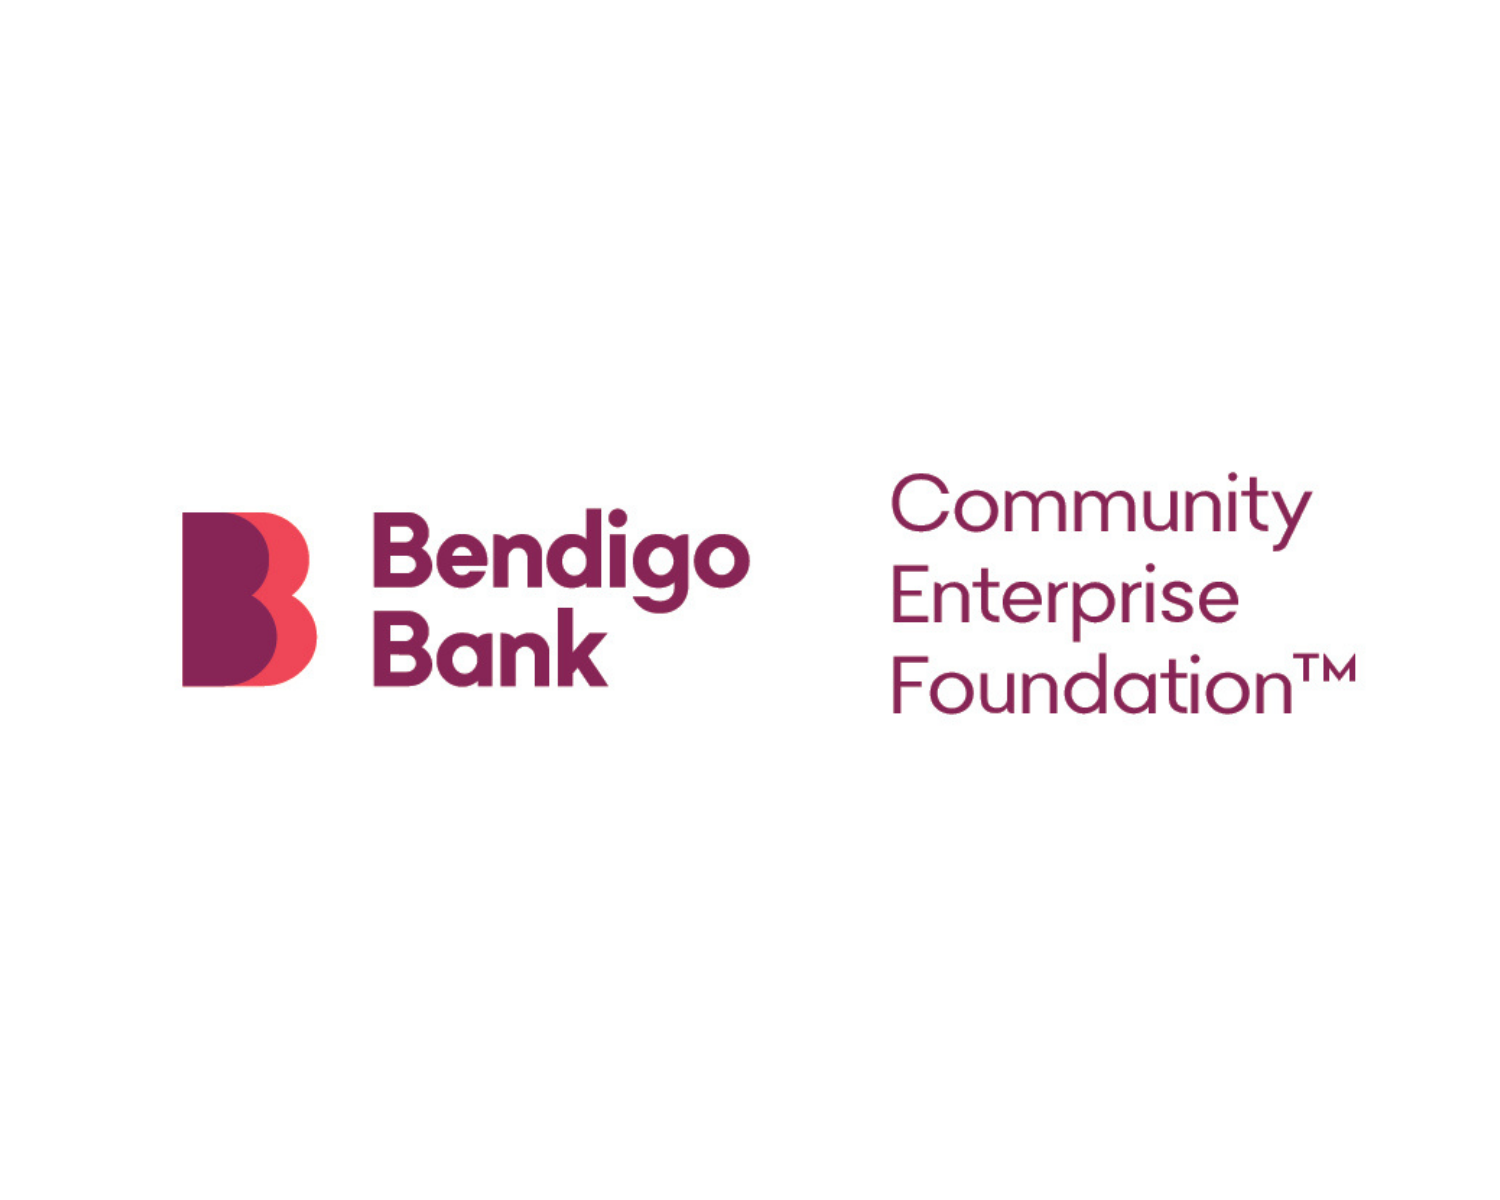 Bendigo Bank Community Enterprise Foundation